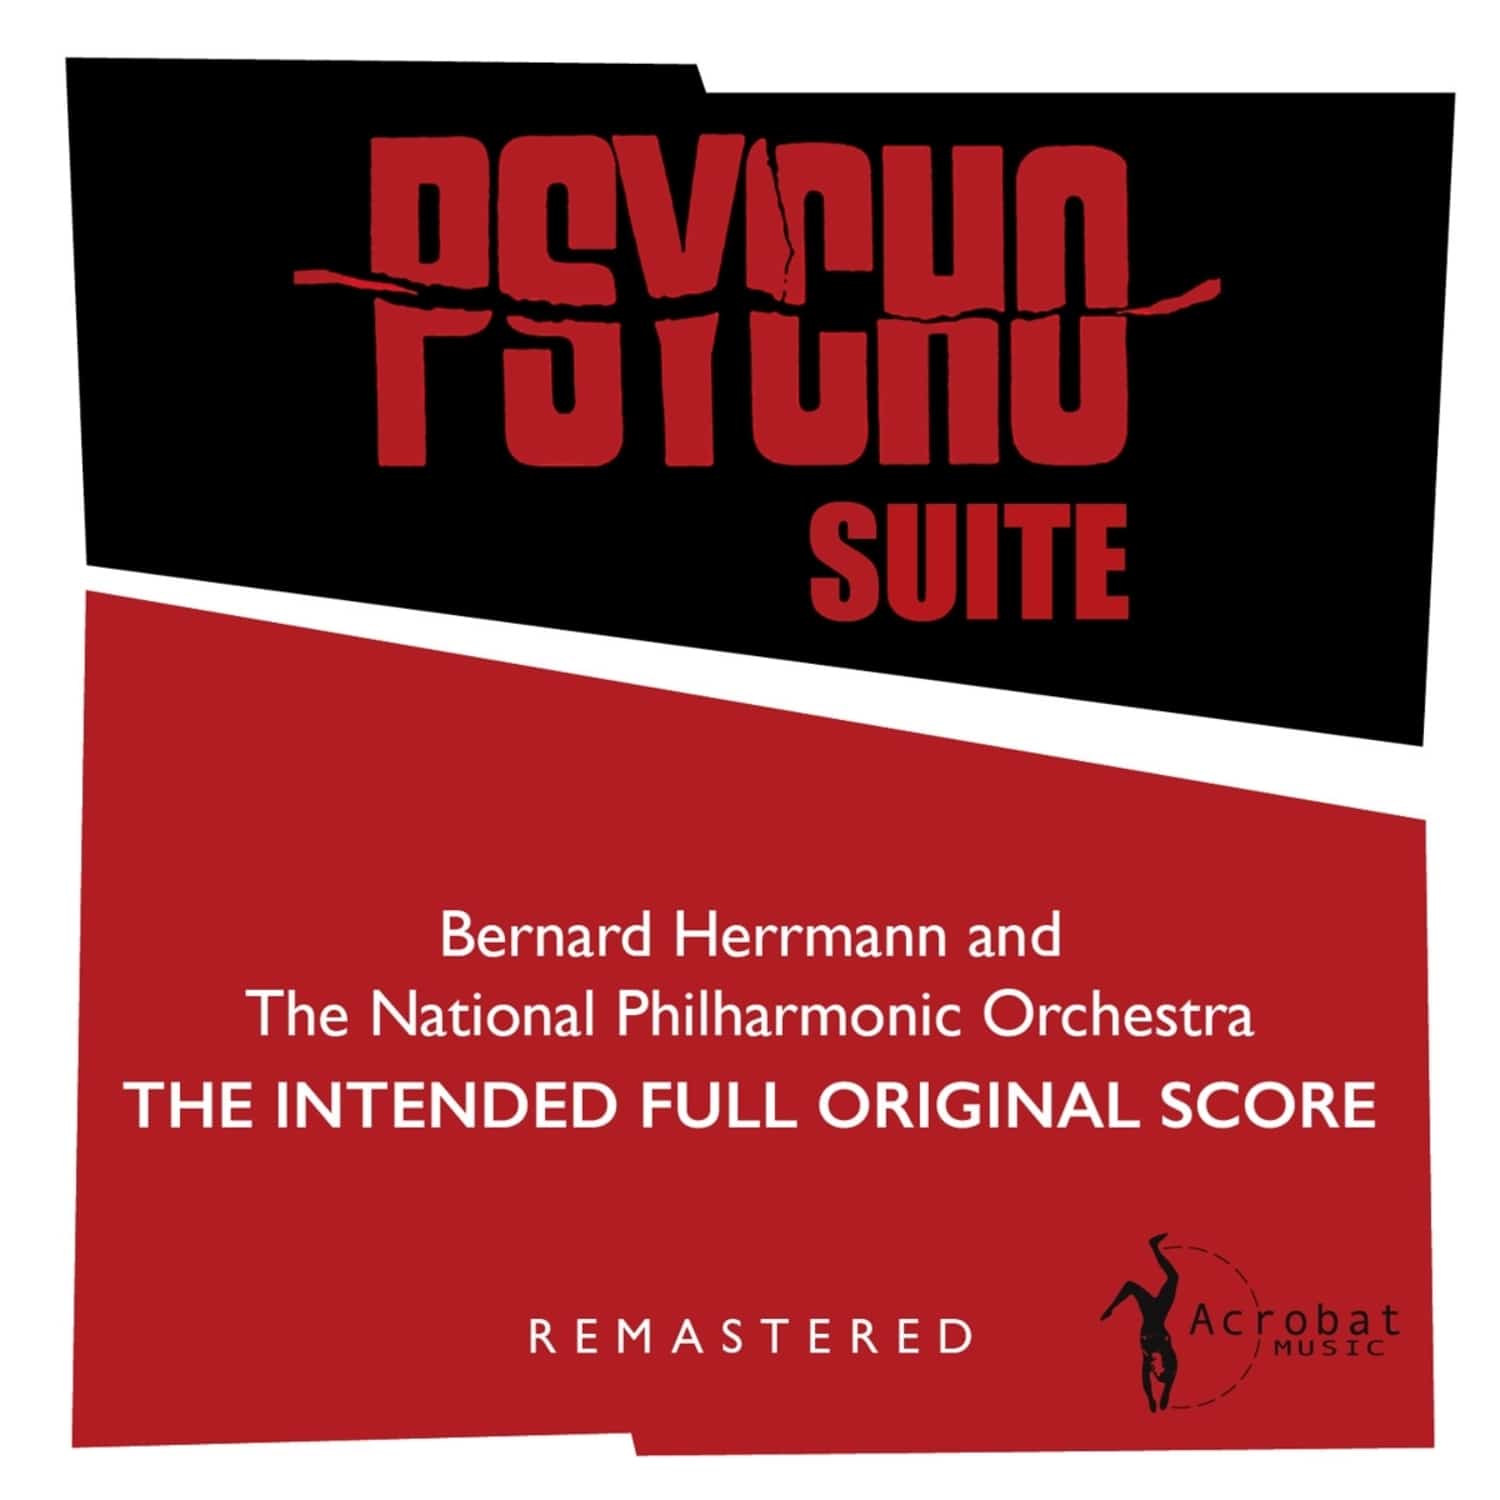 Bernard Herrmann & The National Philharmonic Orch - PSYCHO SUITE 